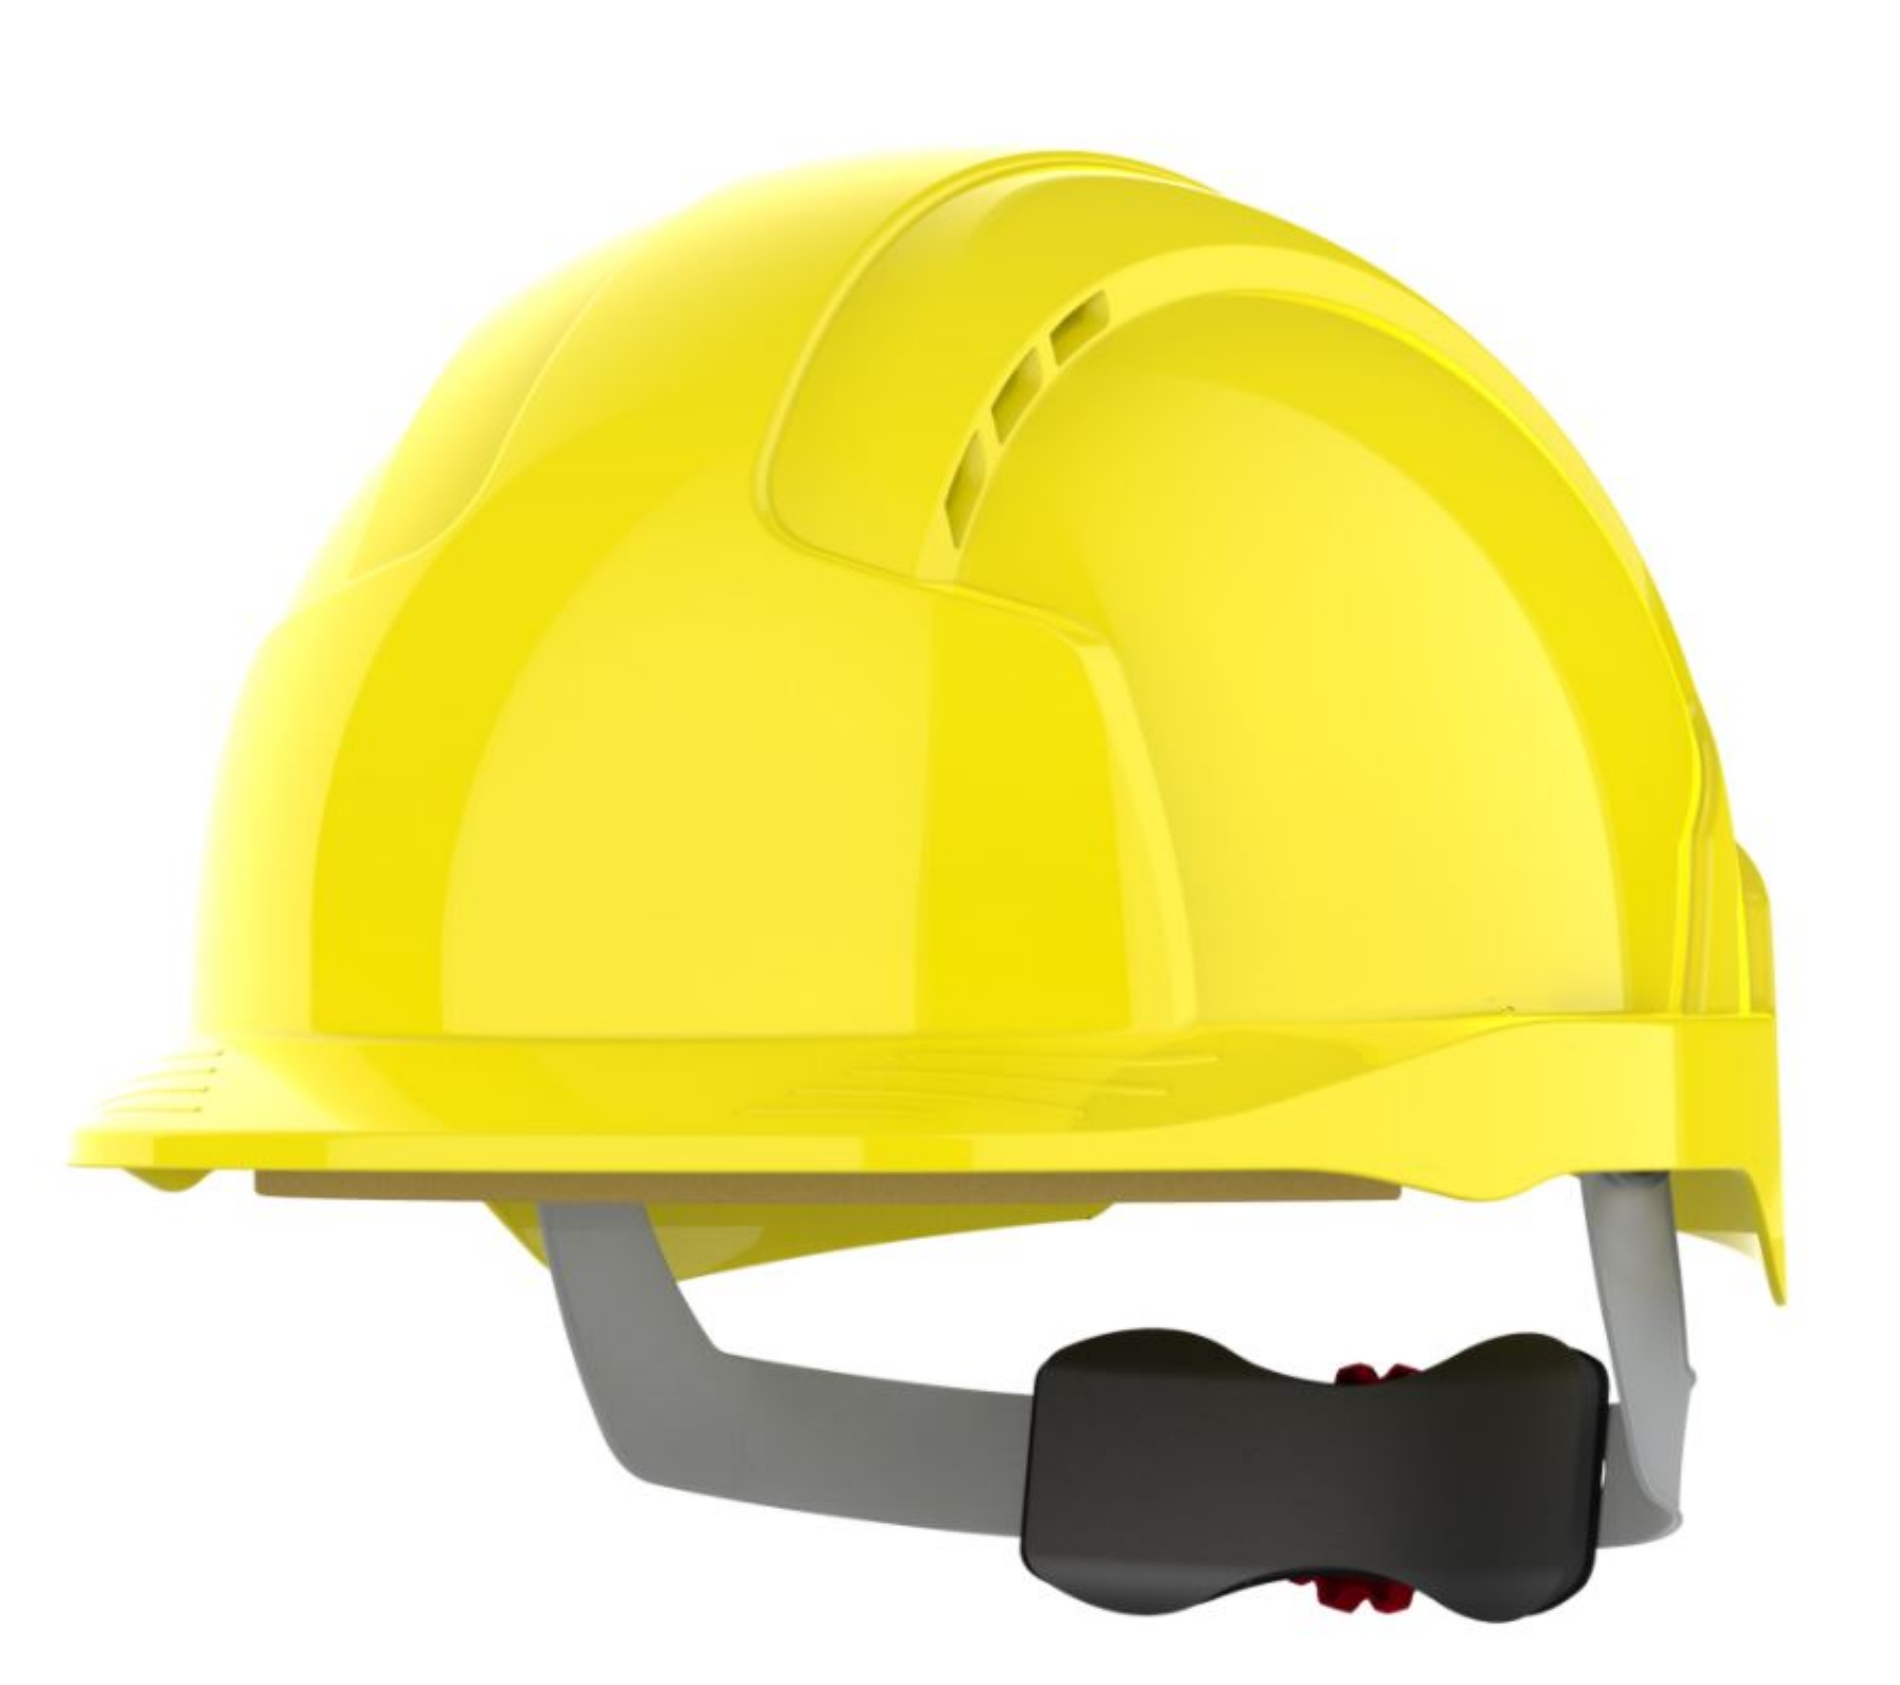 JSP EVOLite Yellow Safety Helmet - Wheel Ratchet - Vented